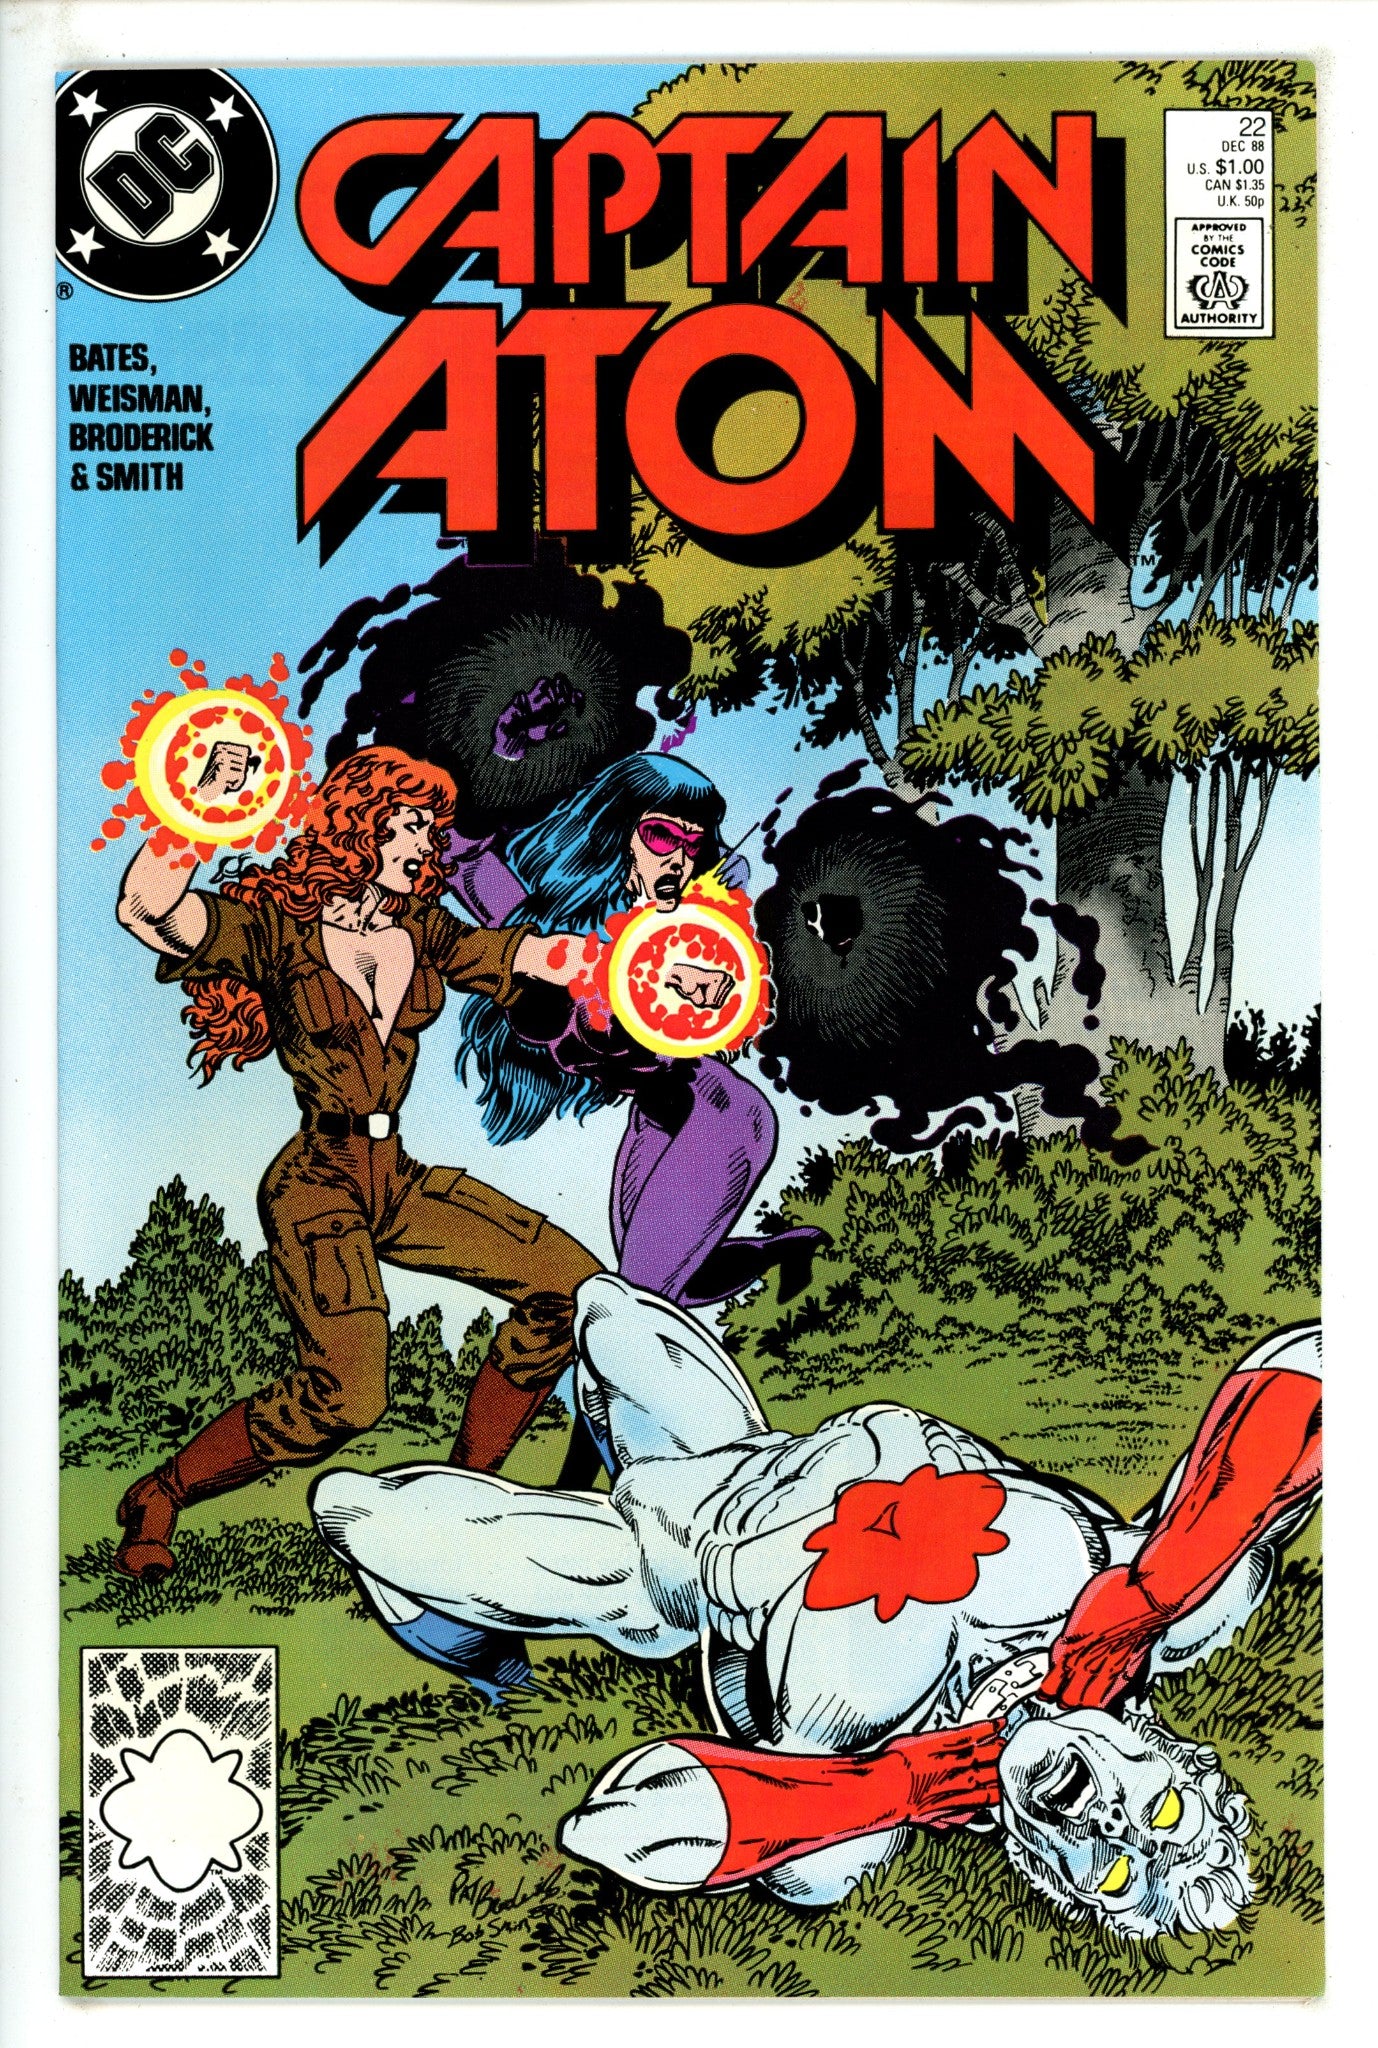 Captain Atom Vol 3 22 (1988)